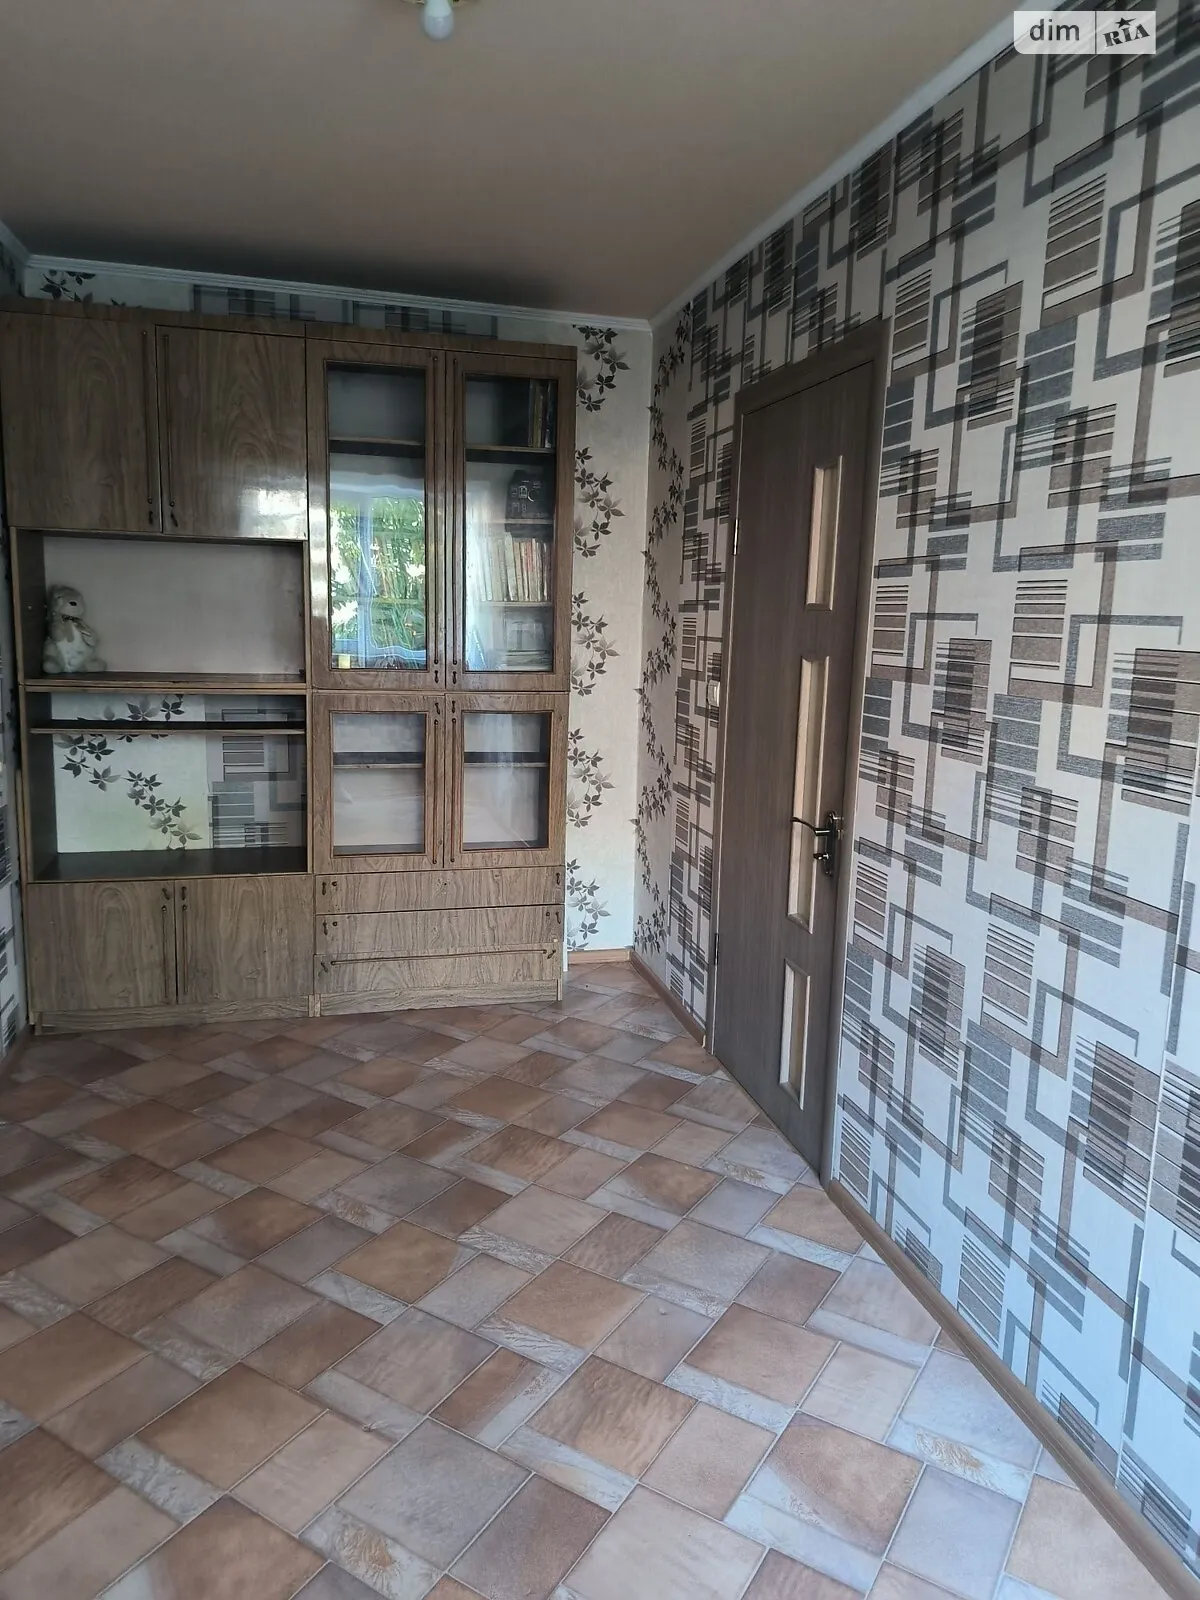 Продается комната 24.5 кв. м в Ровно - фото 3